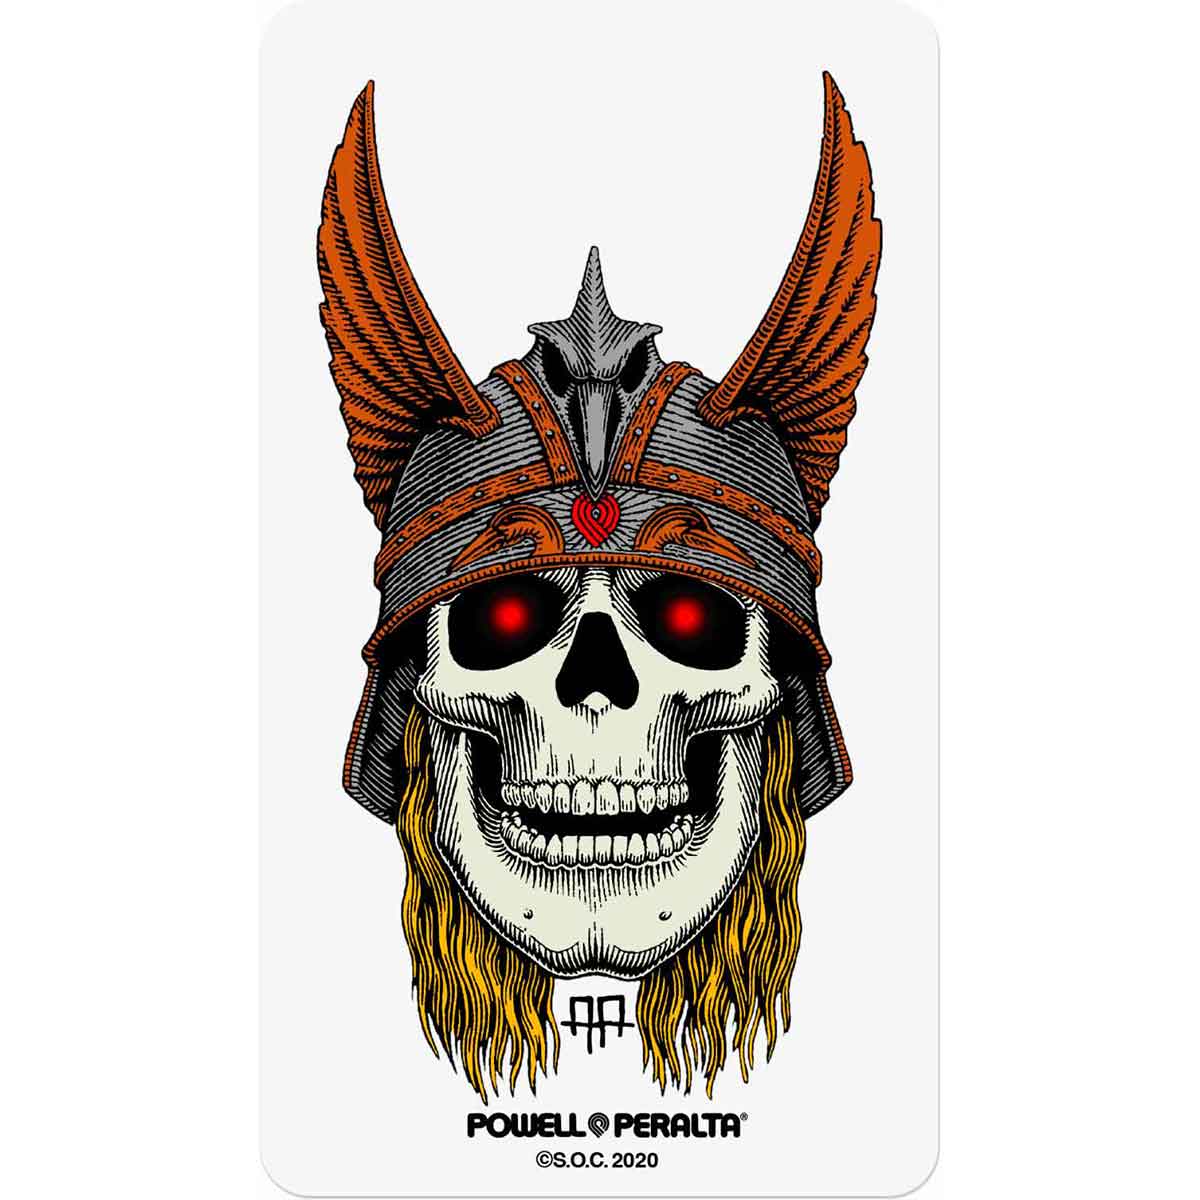 Powell Peralta Per Welinder Nordic Skull Clear Skateboard Sticker 4.5" x 3.5"